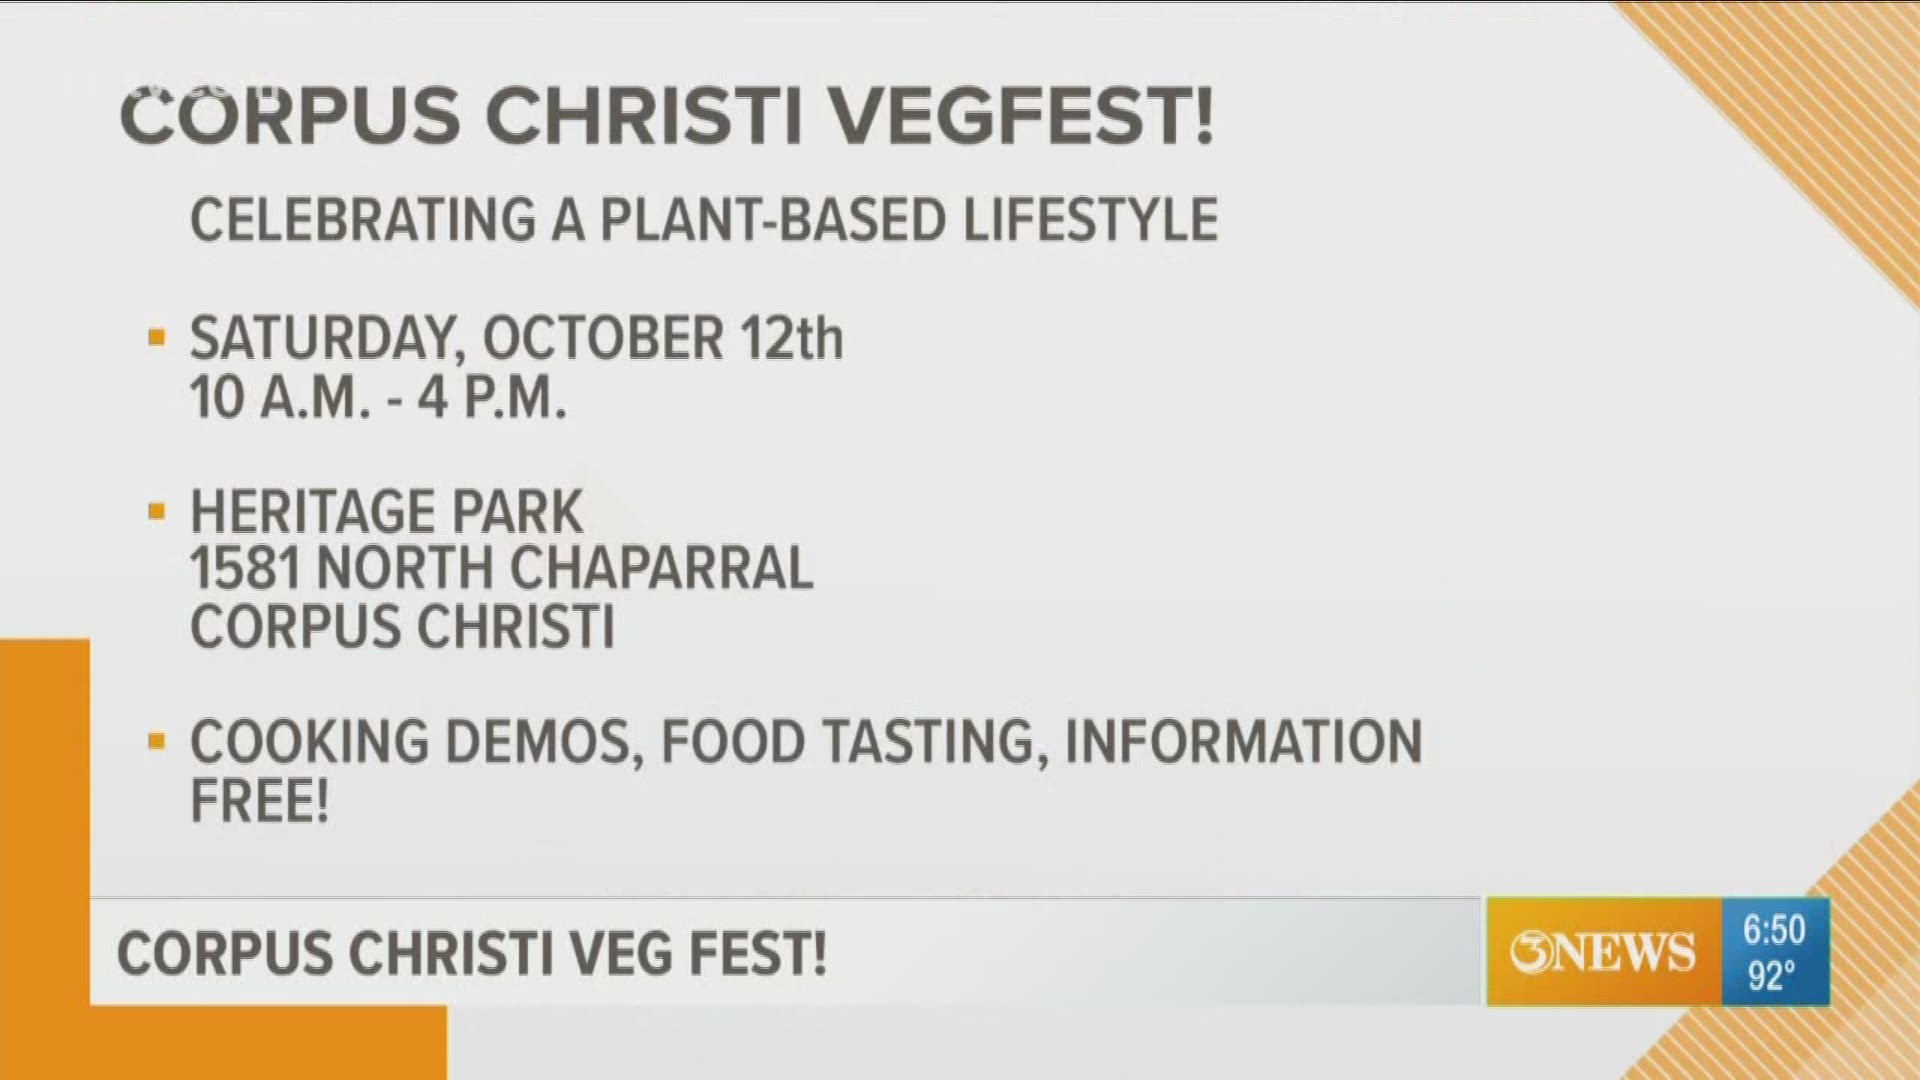 Corpus Christi VegFest provides info and ideas on vegan cooking.